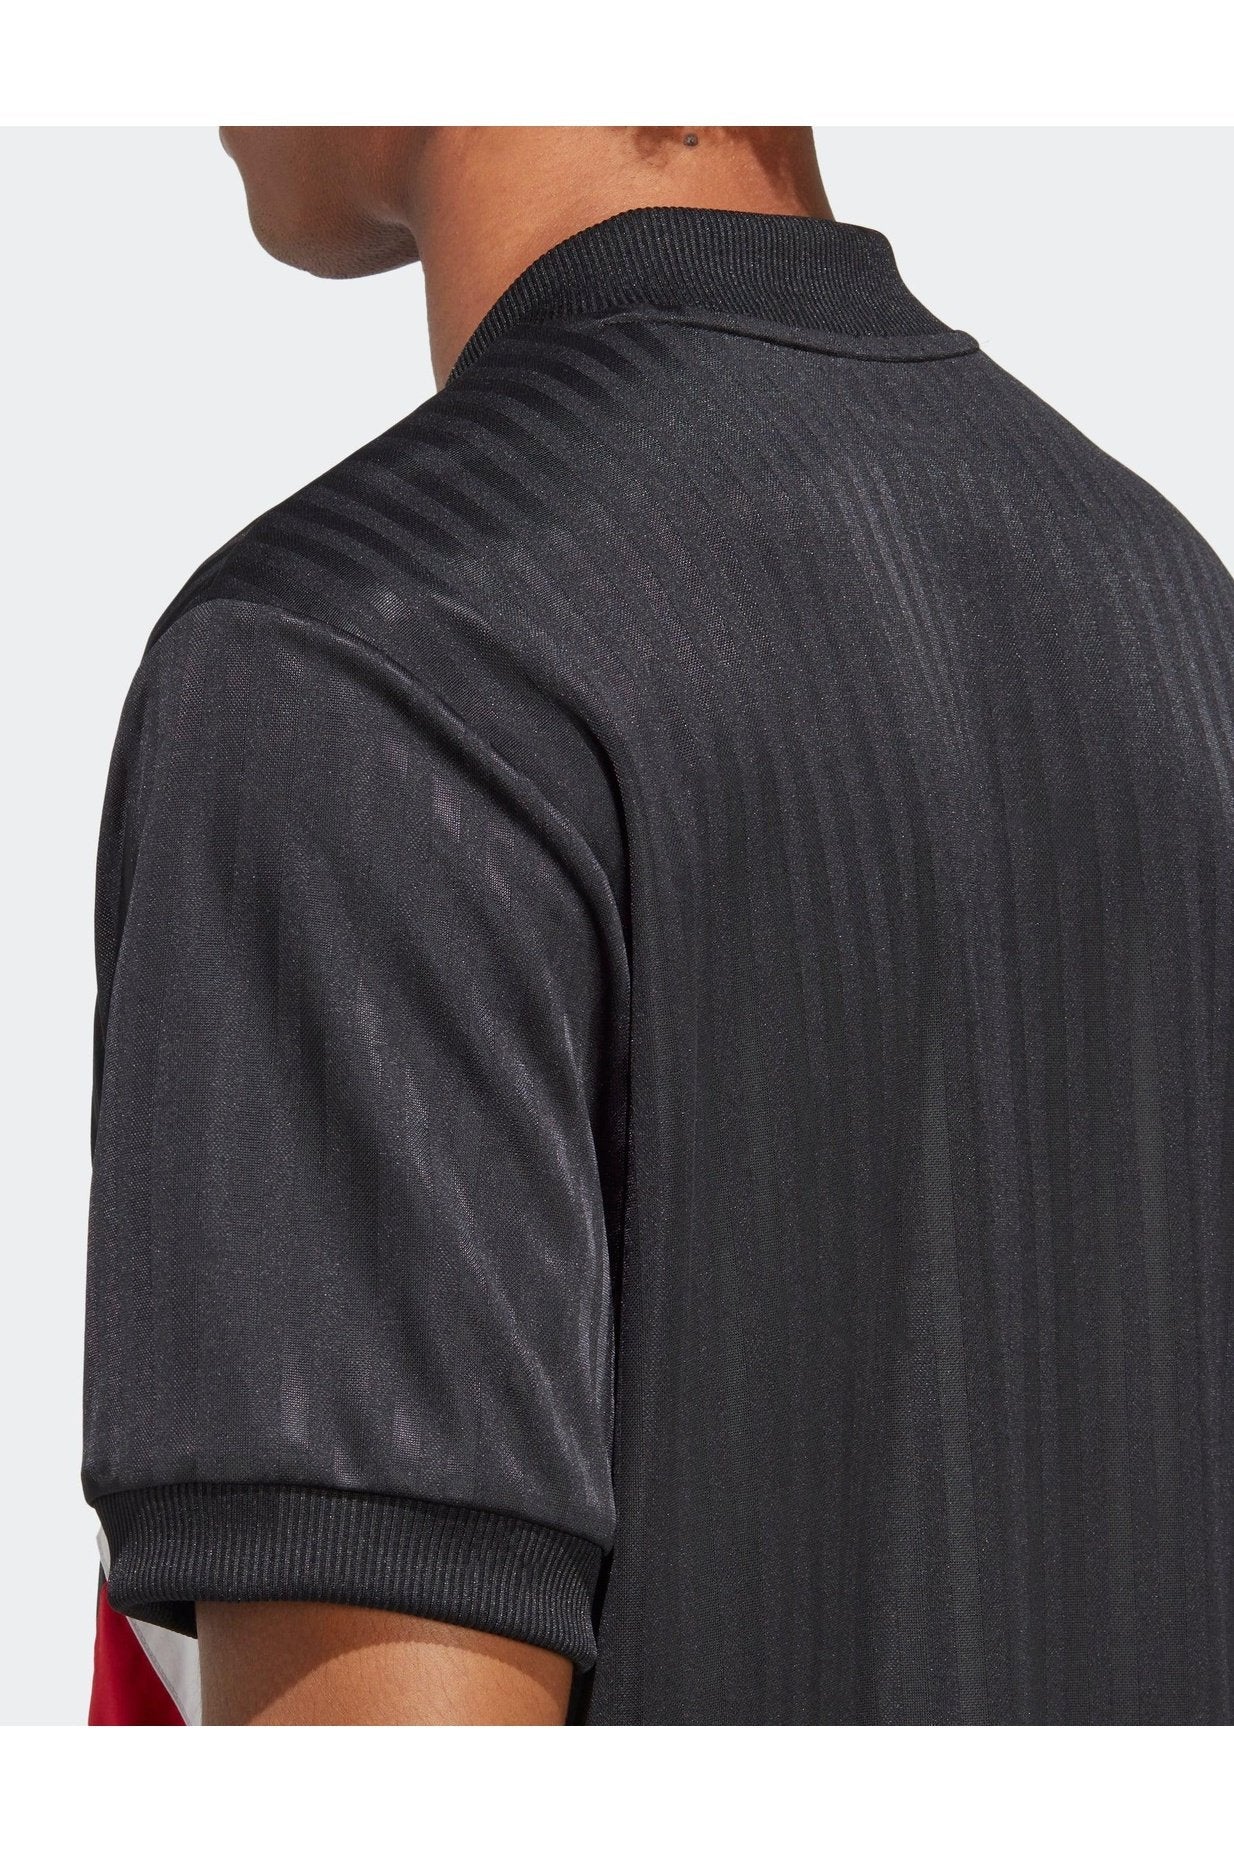 ADIDAS - טישירט MANCHESTER UNITED לגבר בצבע שחור - MASHBIR//365